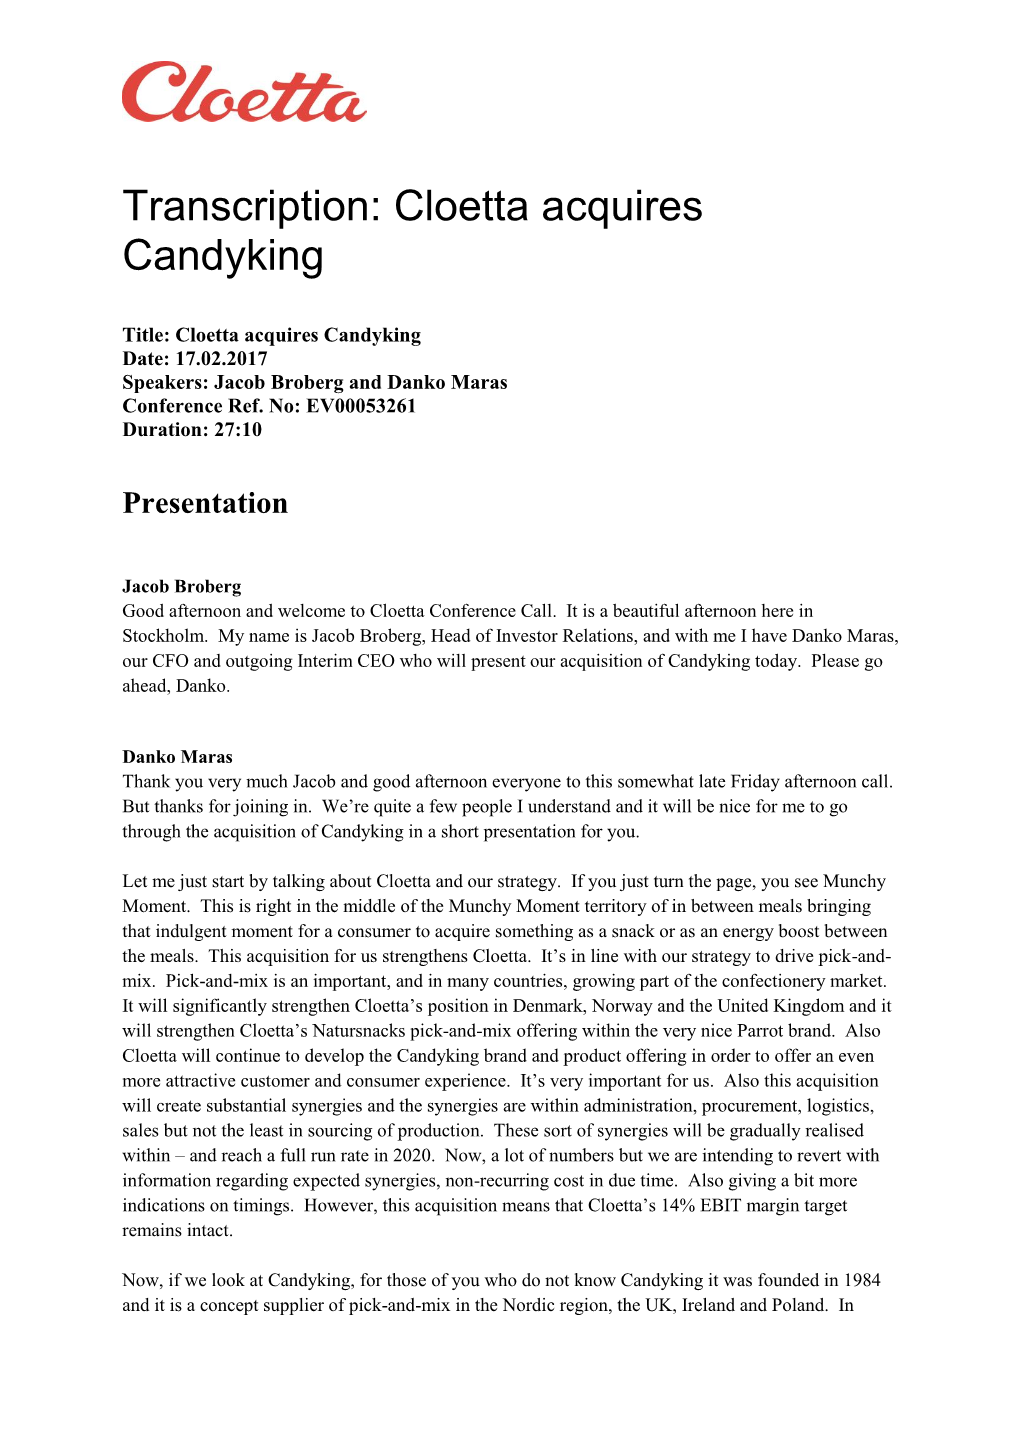 Transcription: Cloetta Acquires Candyking